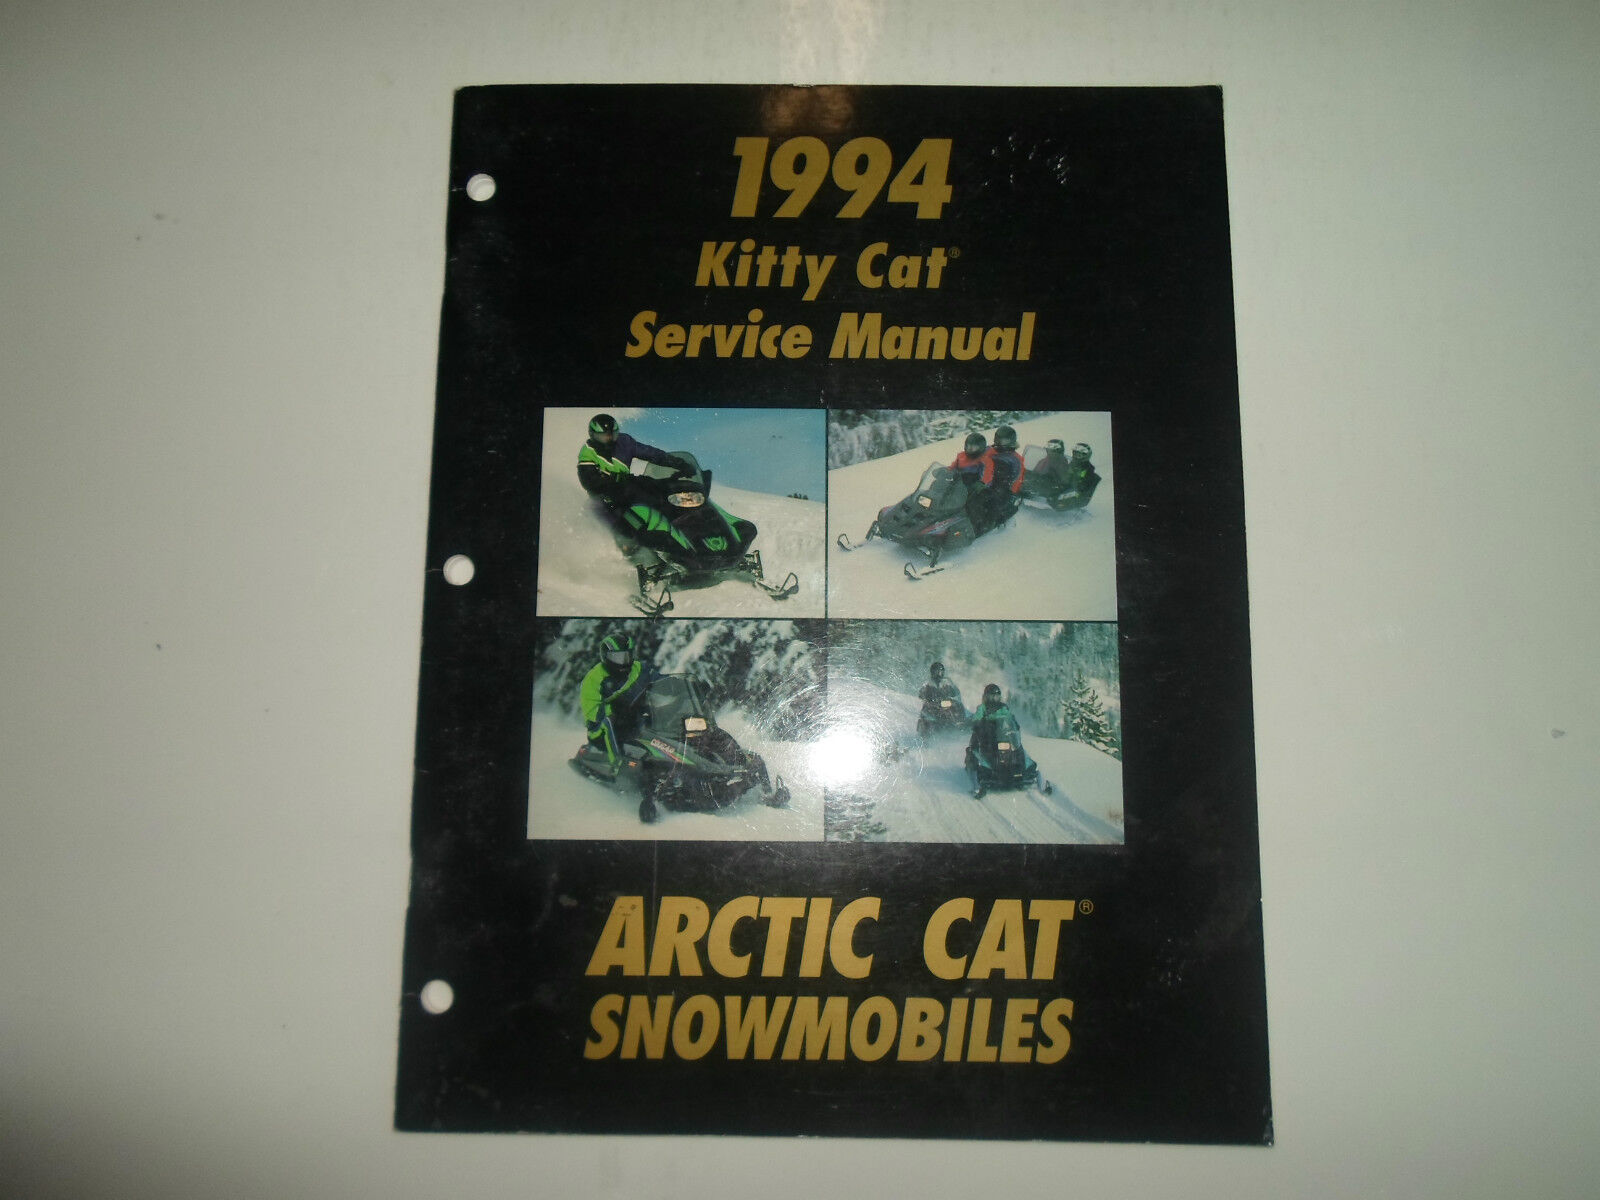 Primary image for 1994 ARCTIC CAT Kitty Cat Service Repair Shop Manual OEM 2254-998